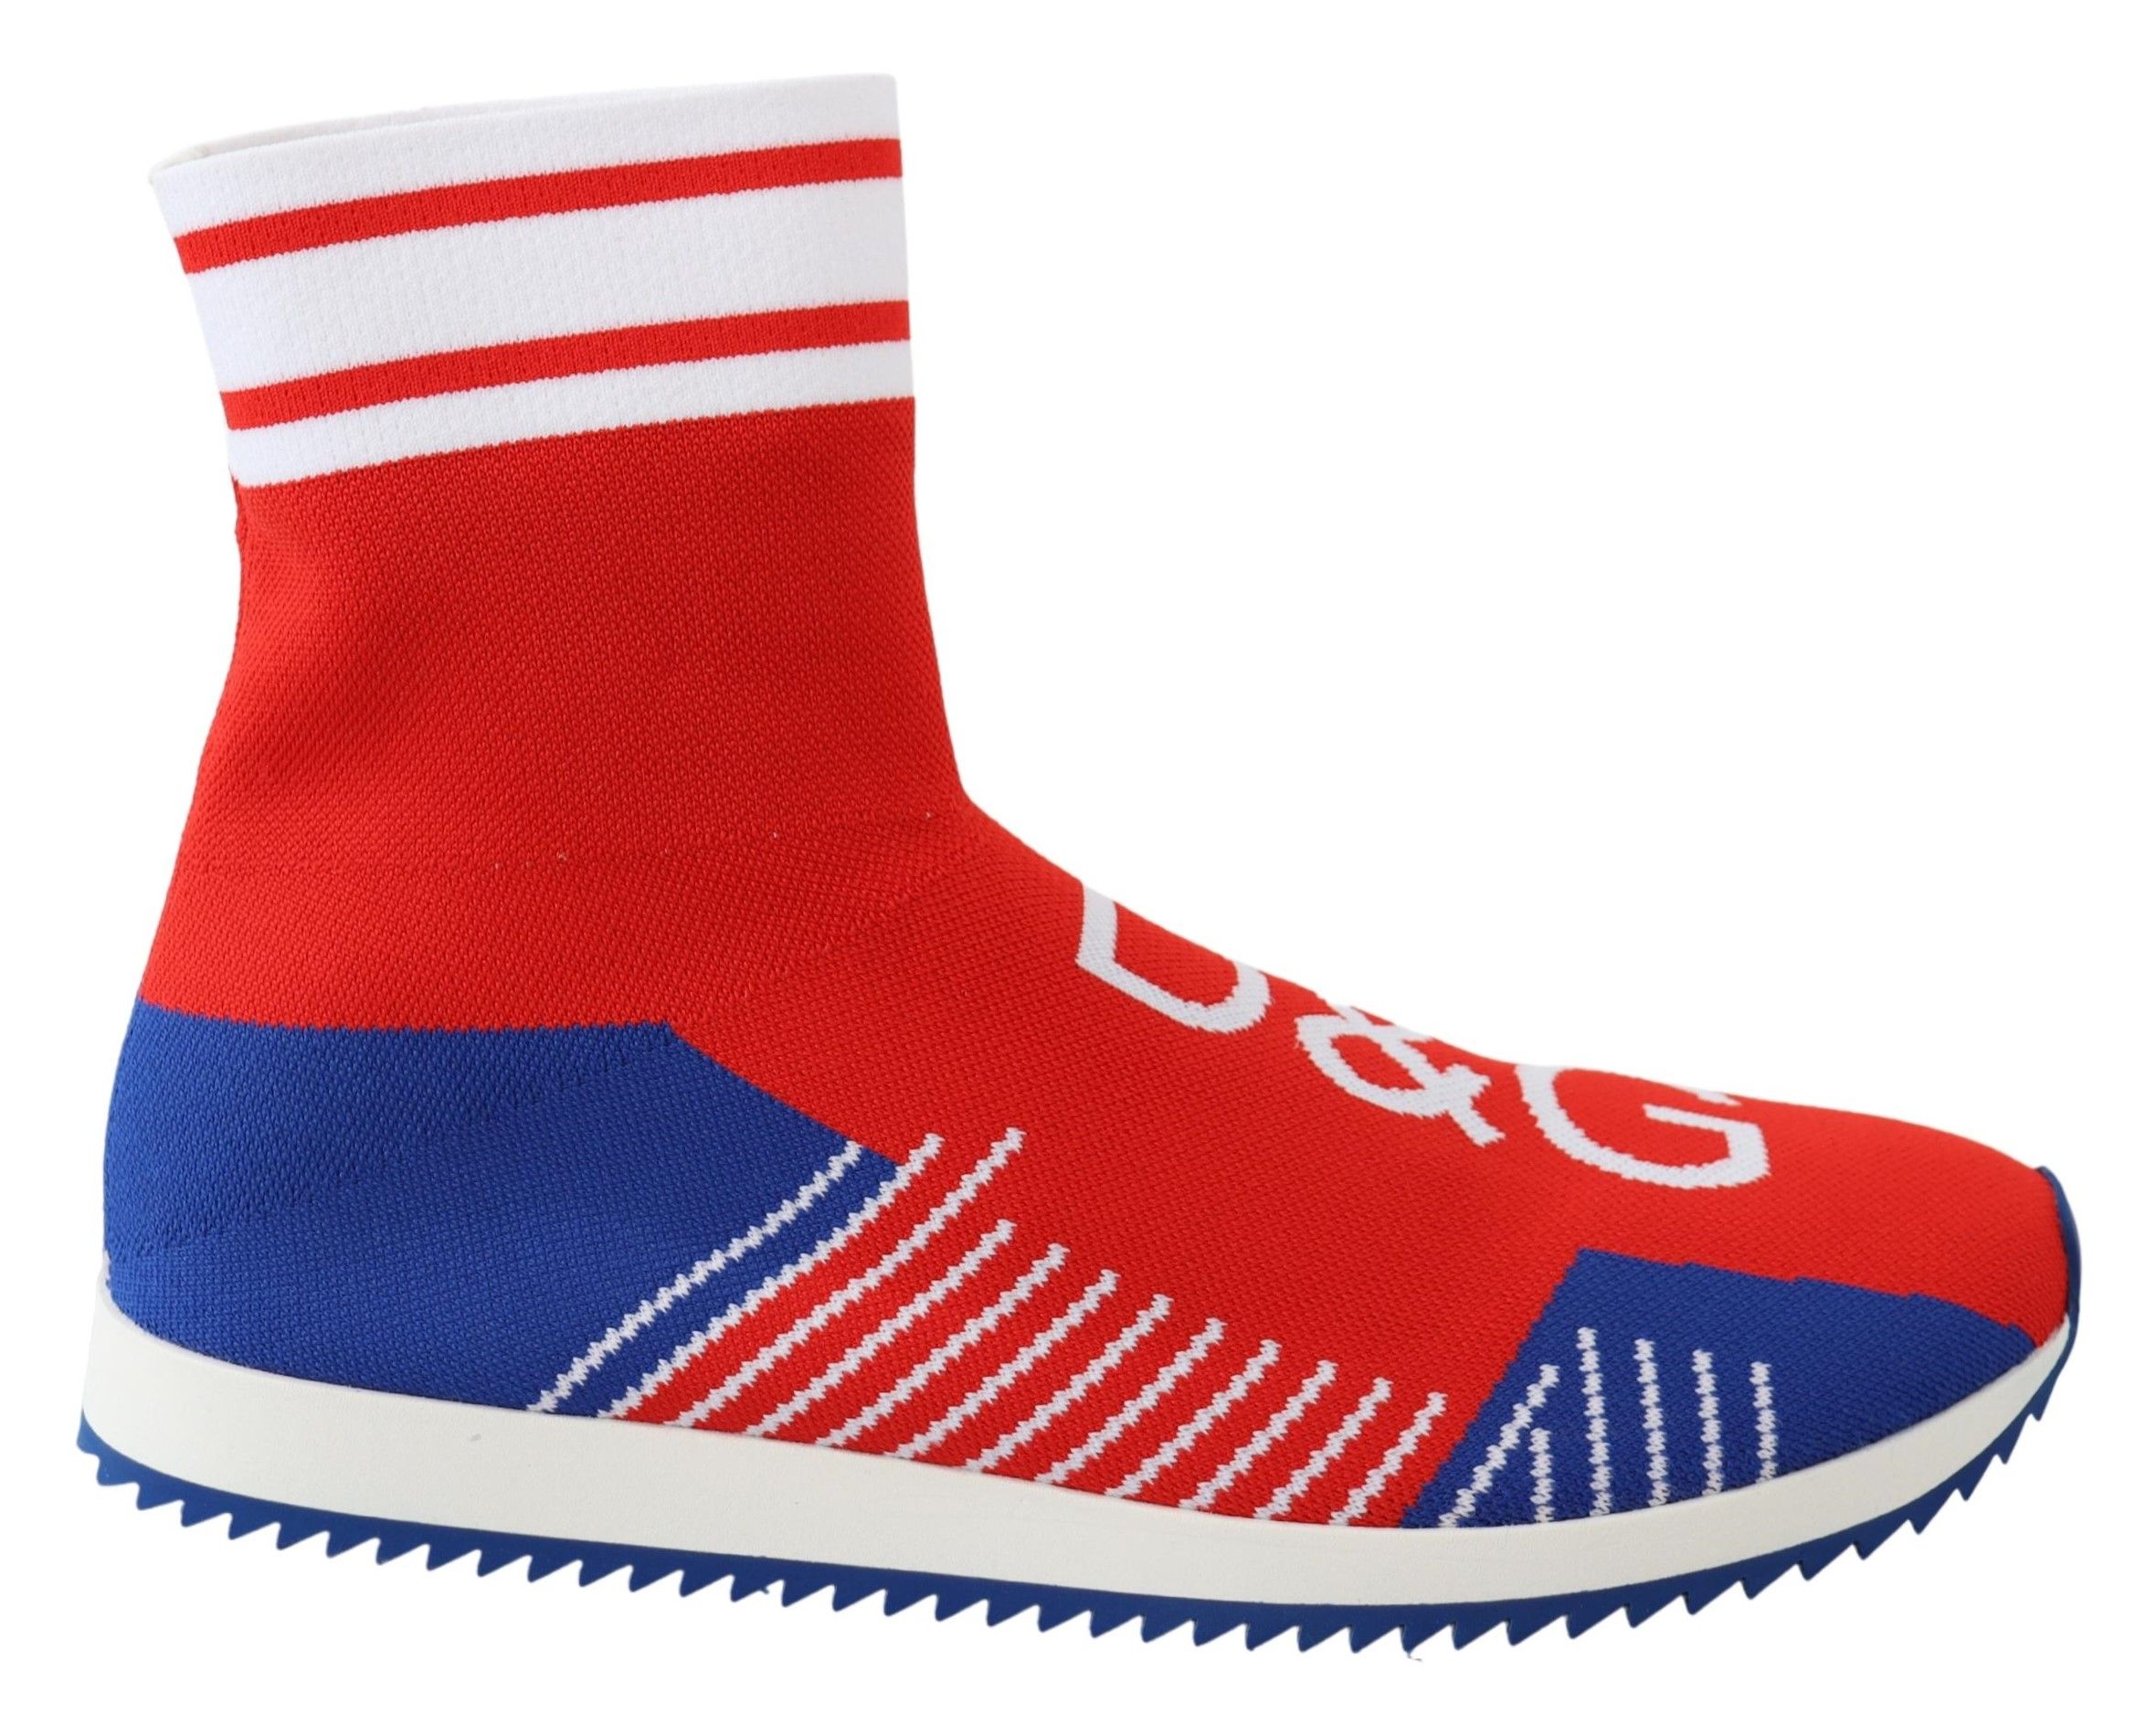 Red Dolce & Gabbana Chic SORRENTO Casual Socks Sneakers EU39/US6